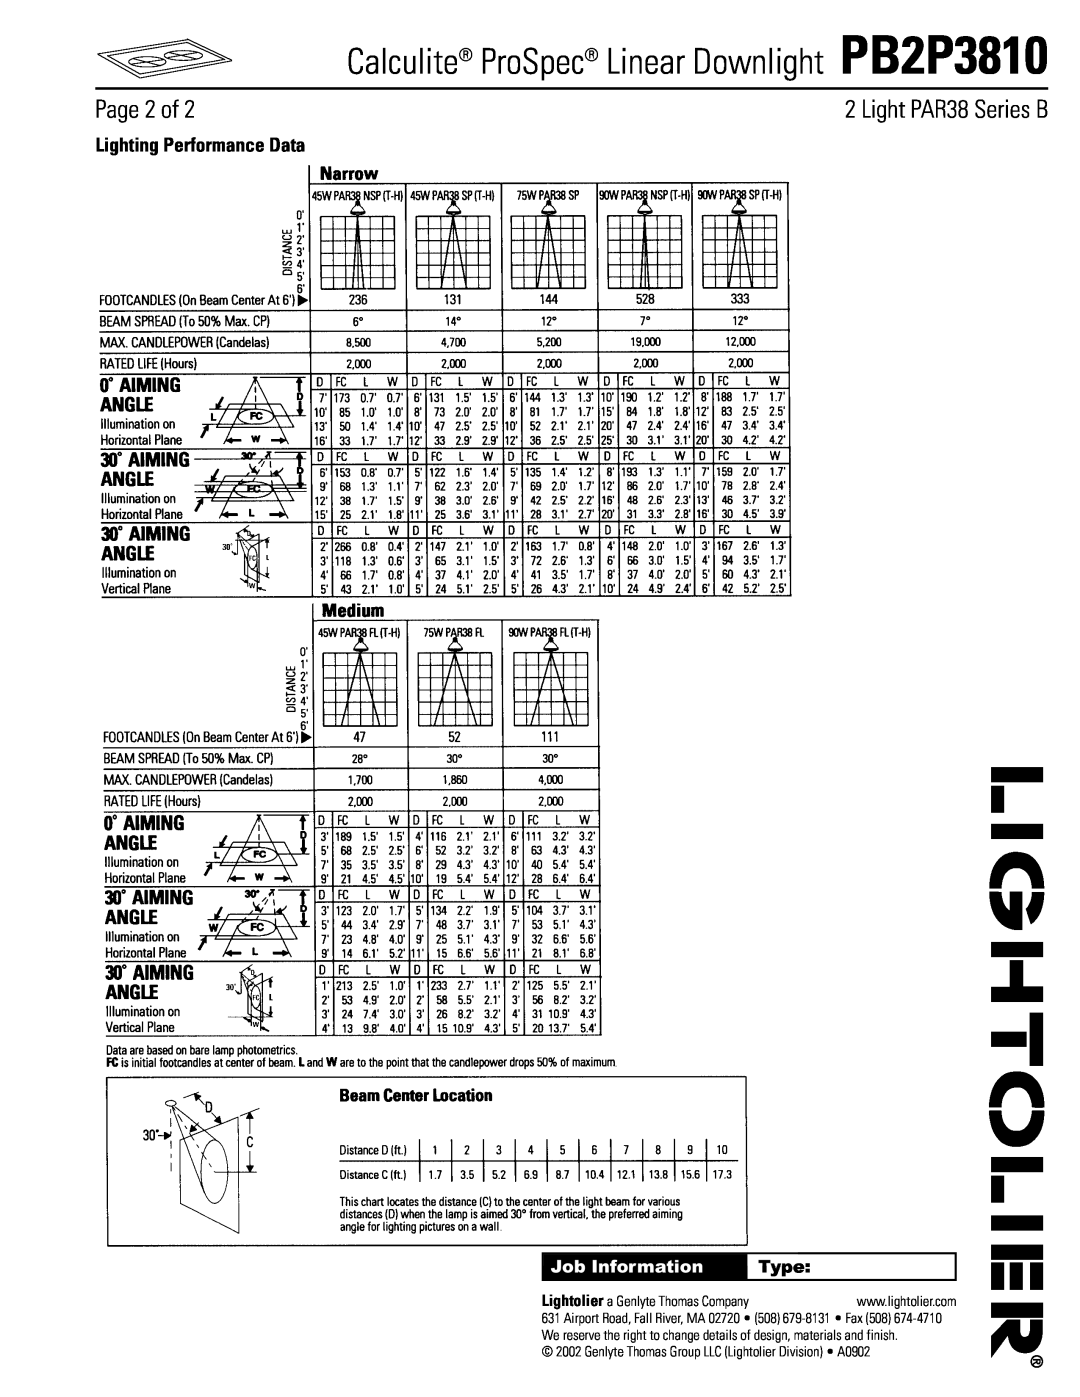 Lightolier Page 2 of, Lighting Performance Data, Type, Calculite ProSpec Linear Downlight PB2P3810, Job Information 